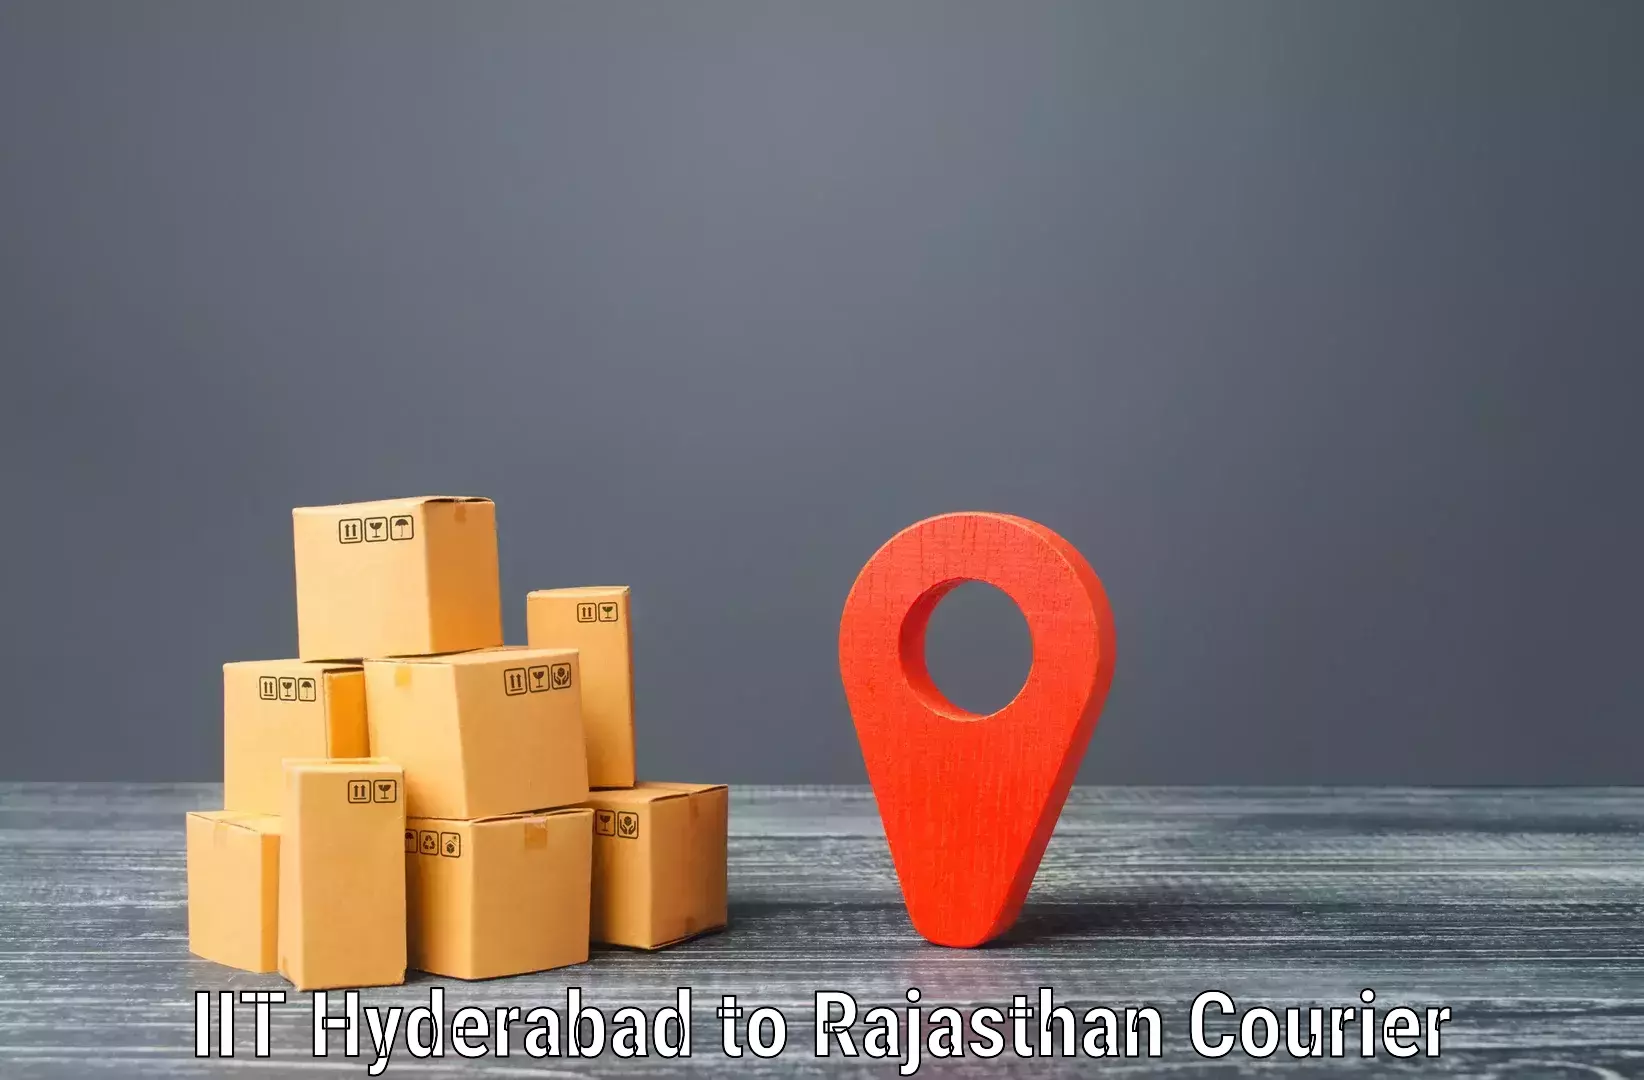 High-capacity parcel service IIT Hyderabad to Bansur